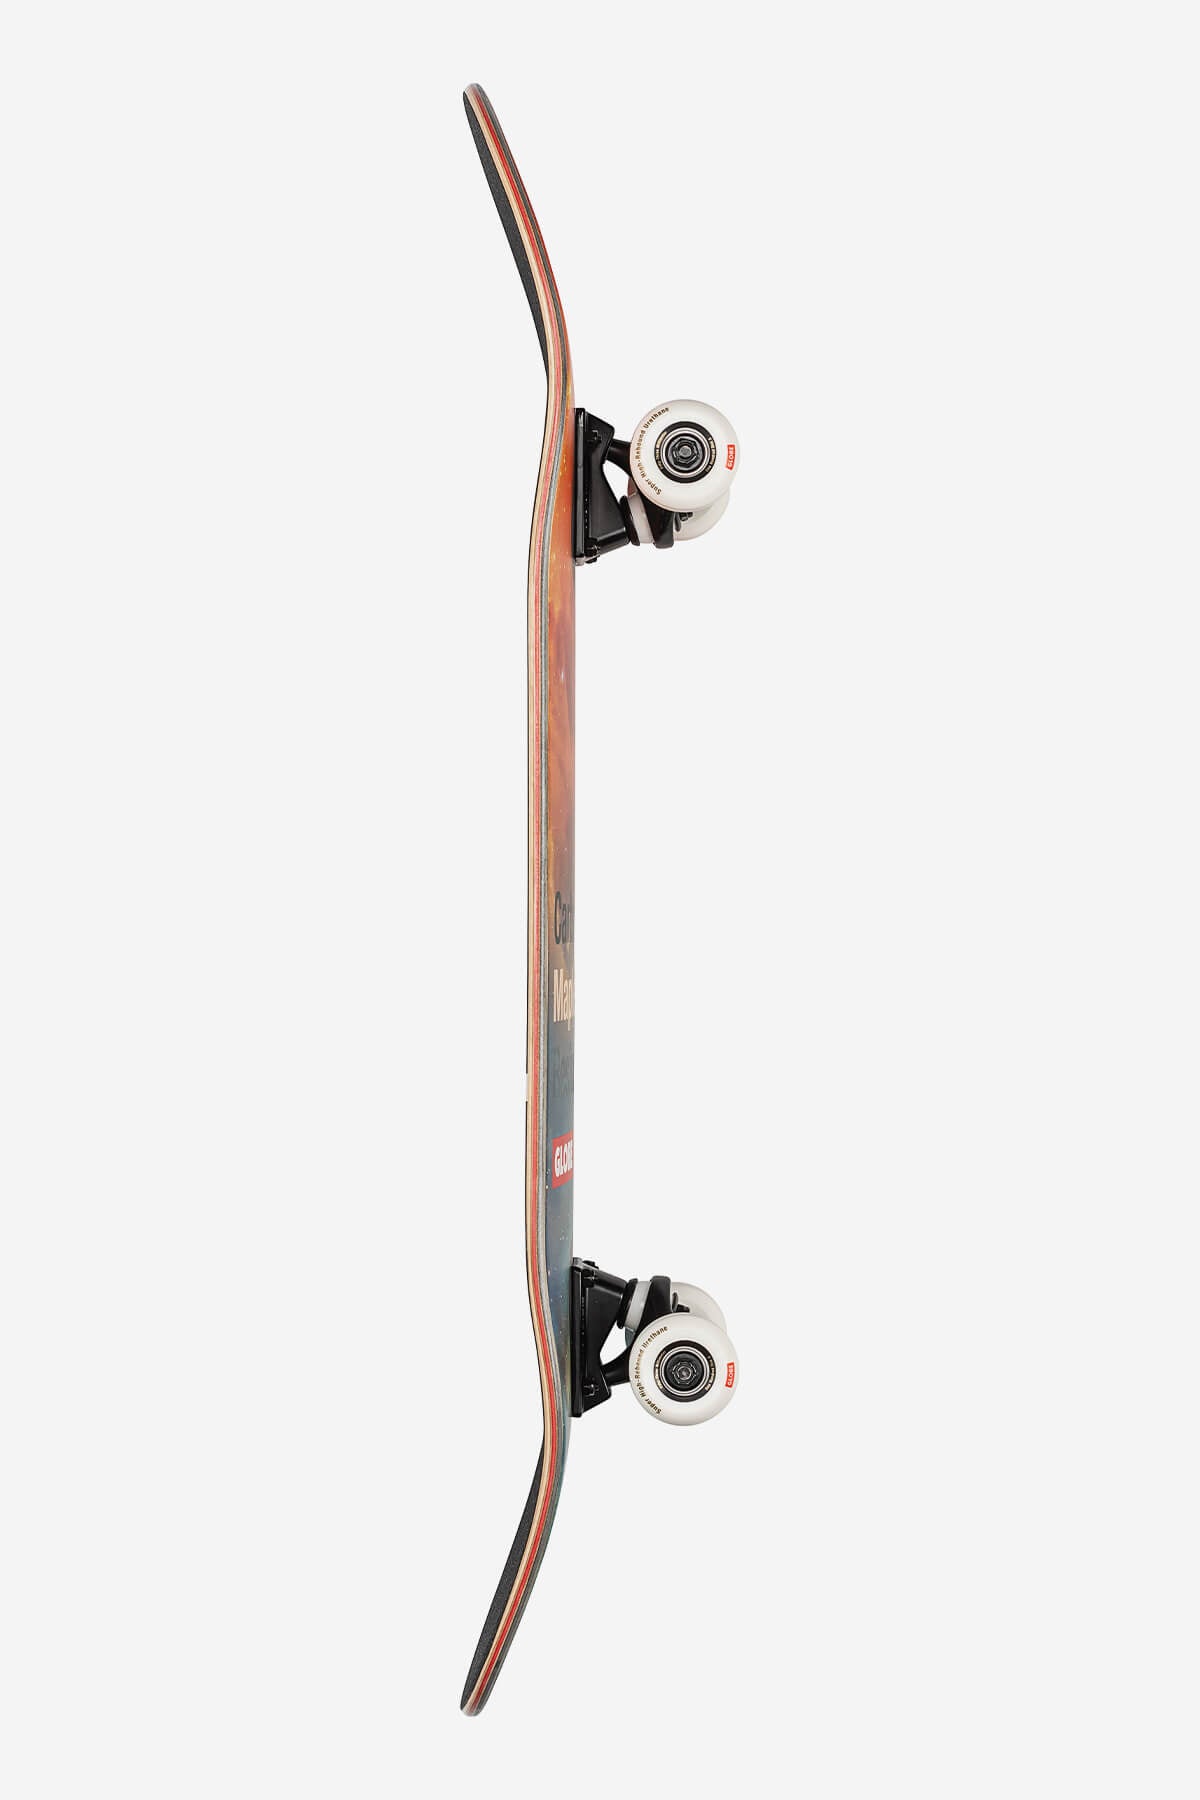 Globe - G3 Bar - Impact/Nebula - 8,125" Completo Skateboard